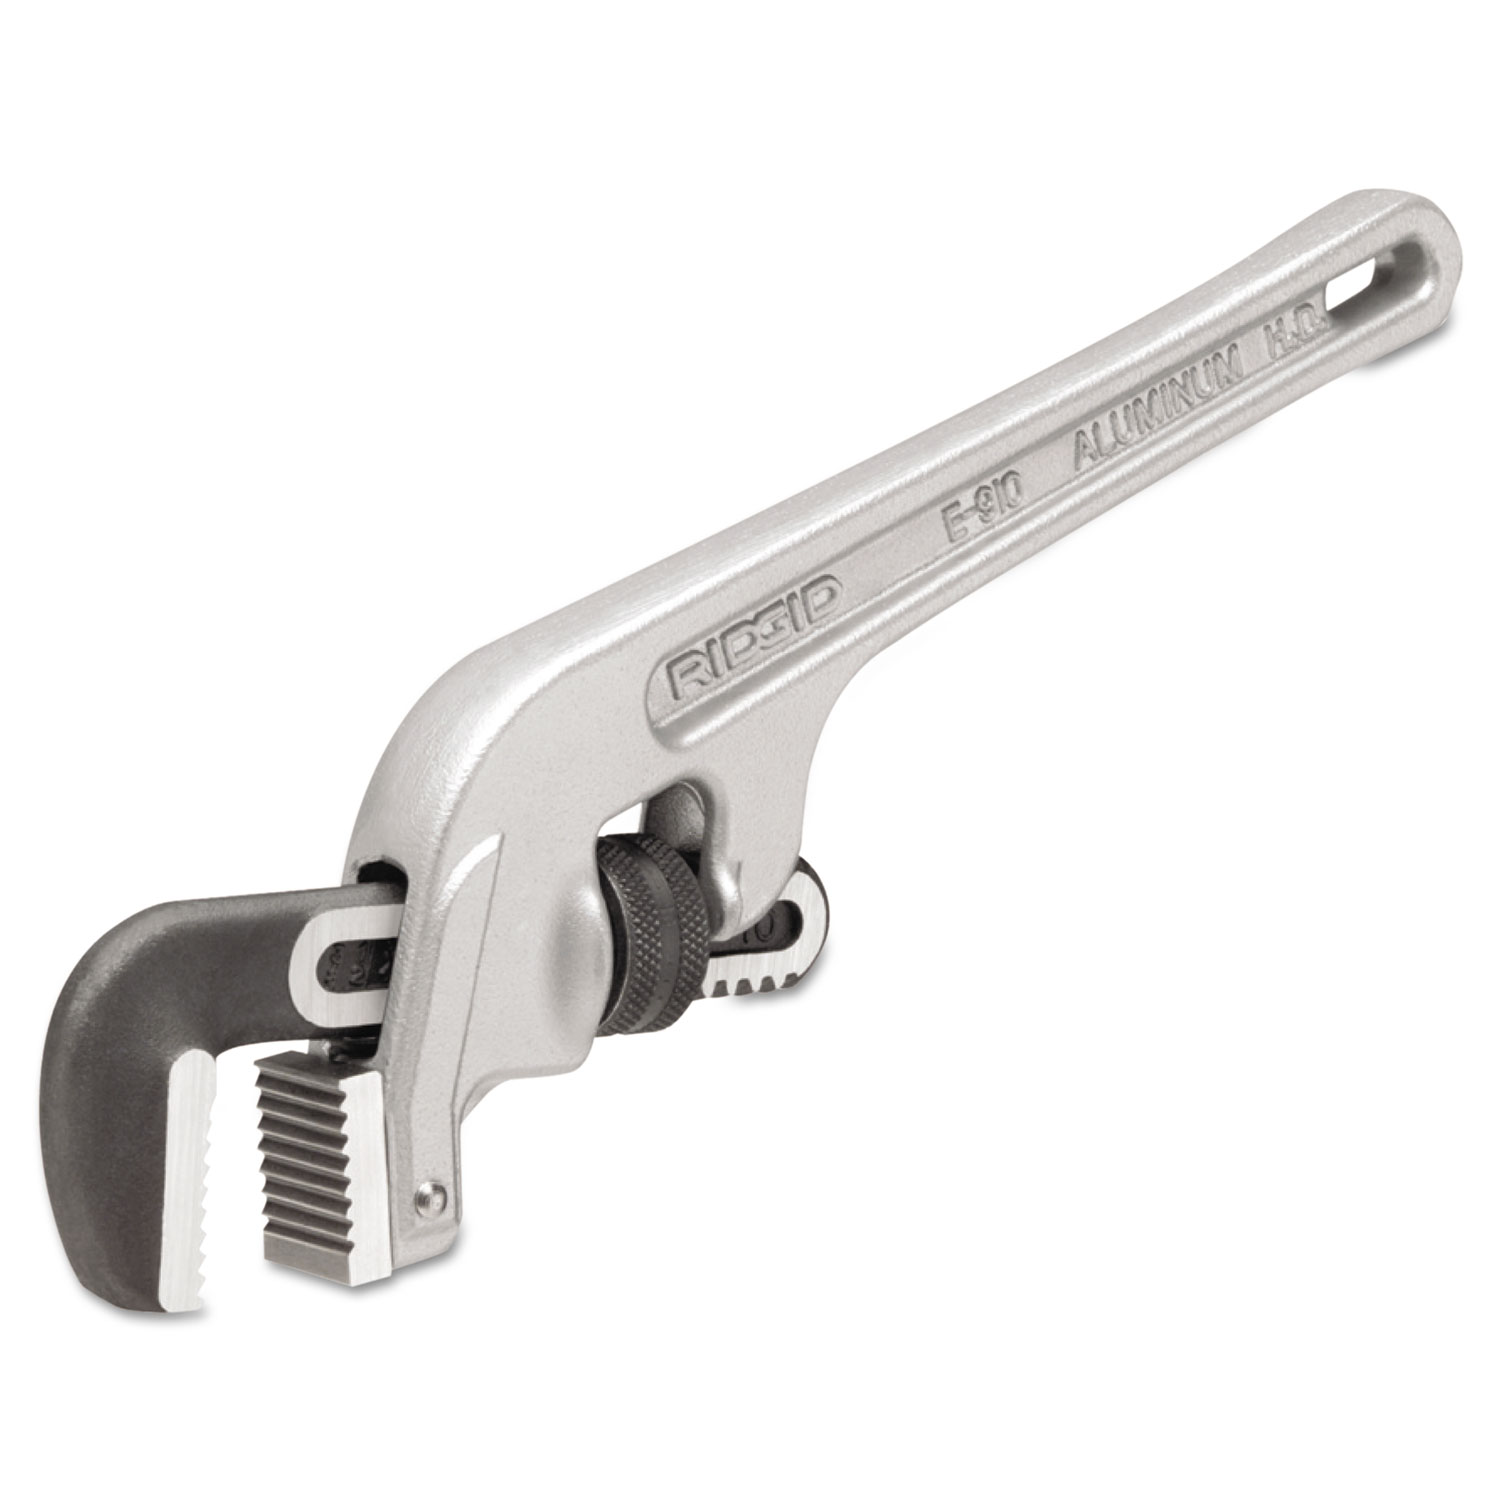 RIDGID Aluminum End Pipe Wrench, 24 Long, 3 Capacity